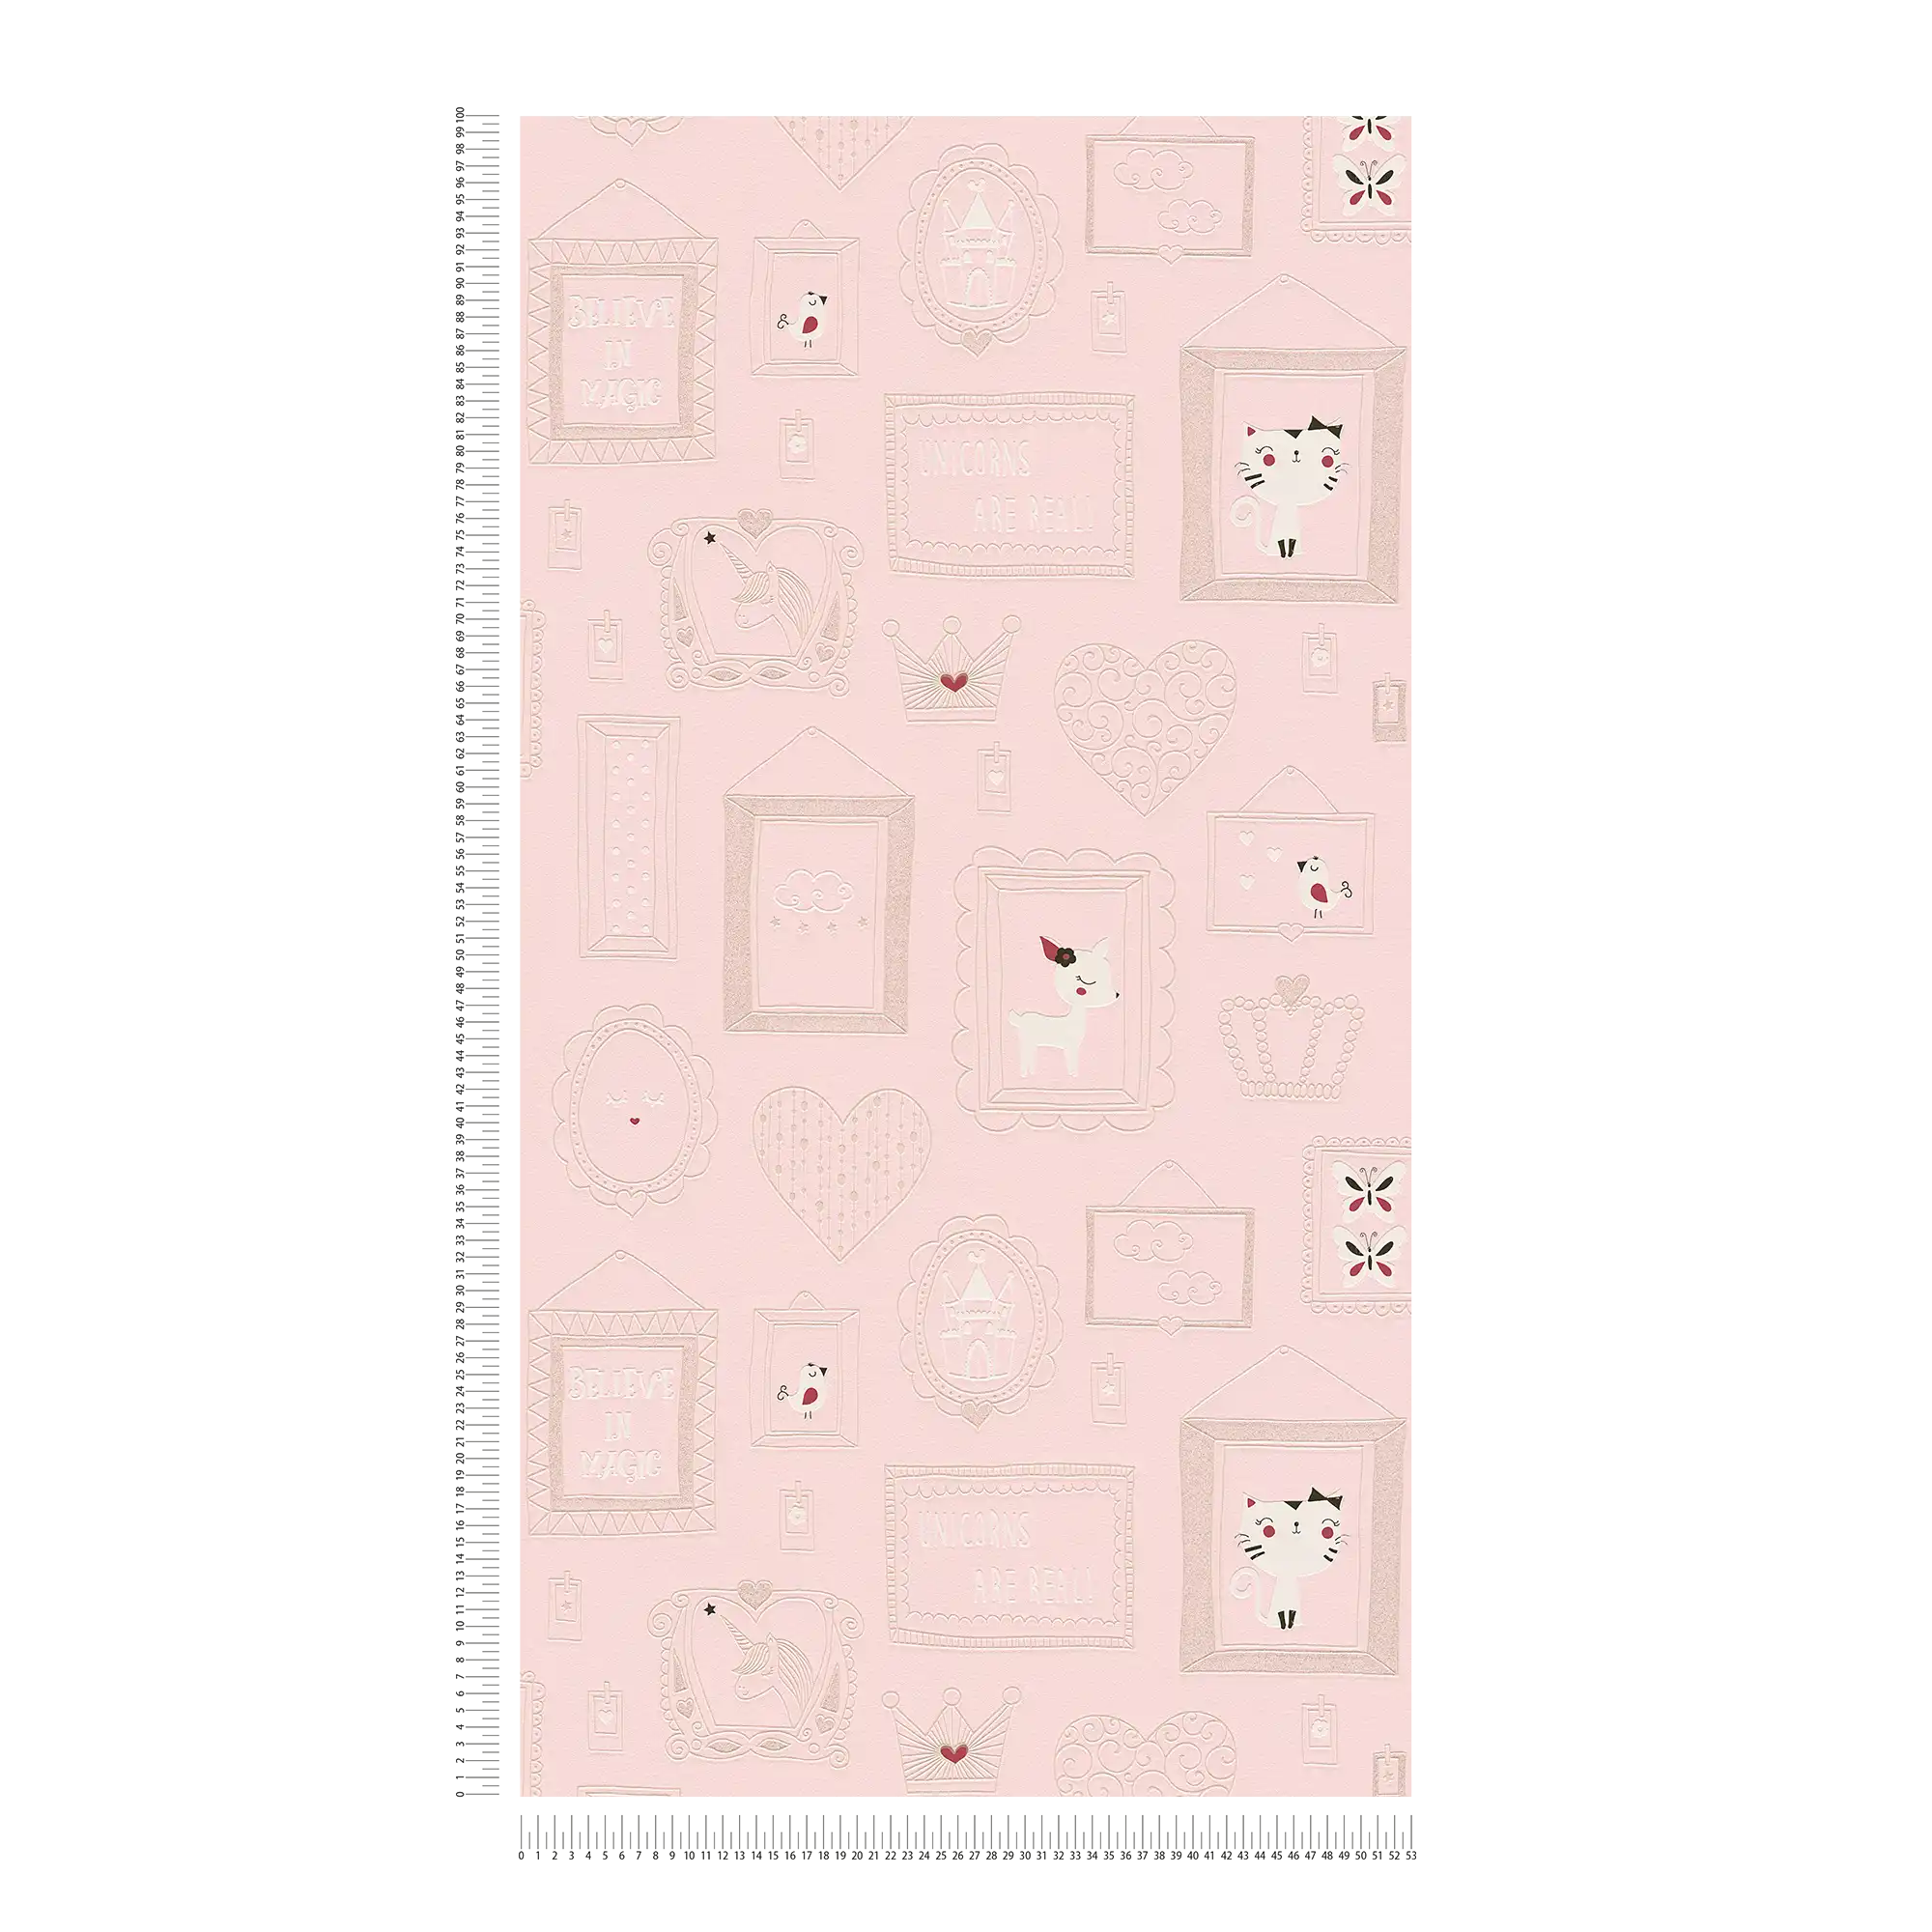             Wallpaper girls room animal motifs with glitter - pink, white
        